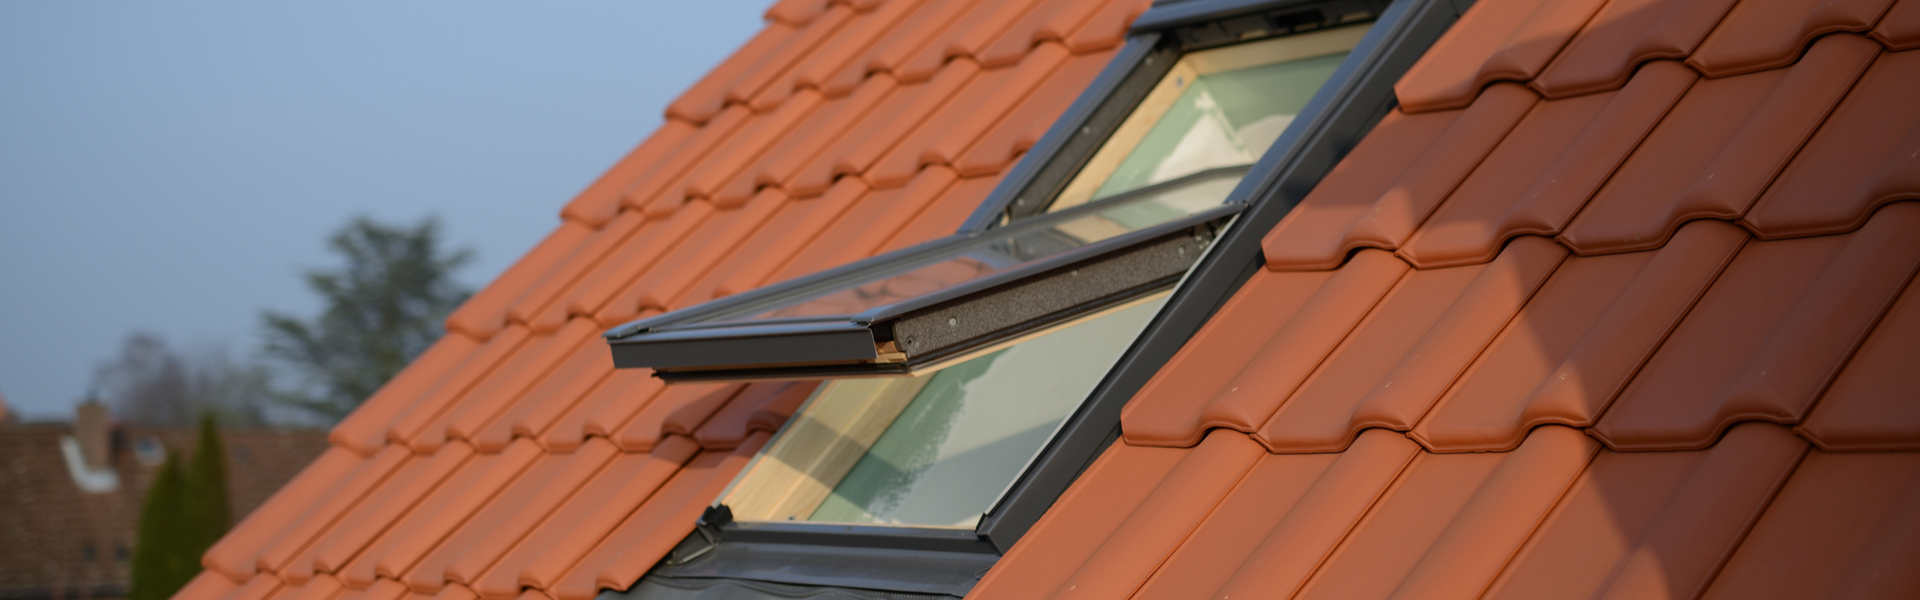 Commercial Roofing Contractors Shrewsbury